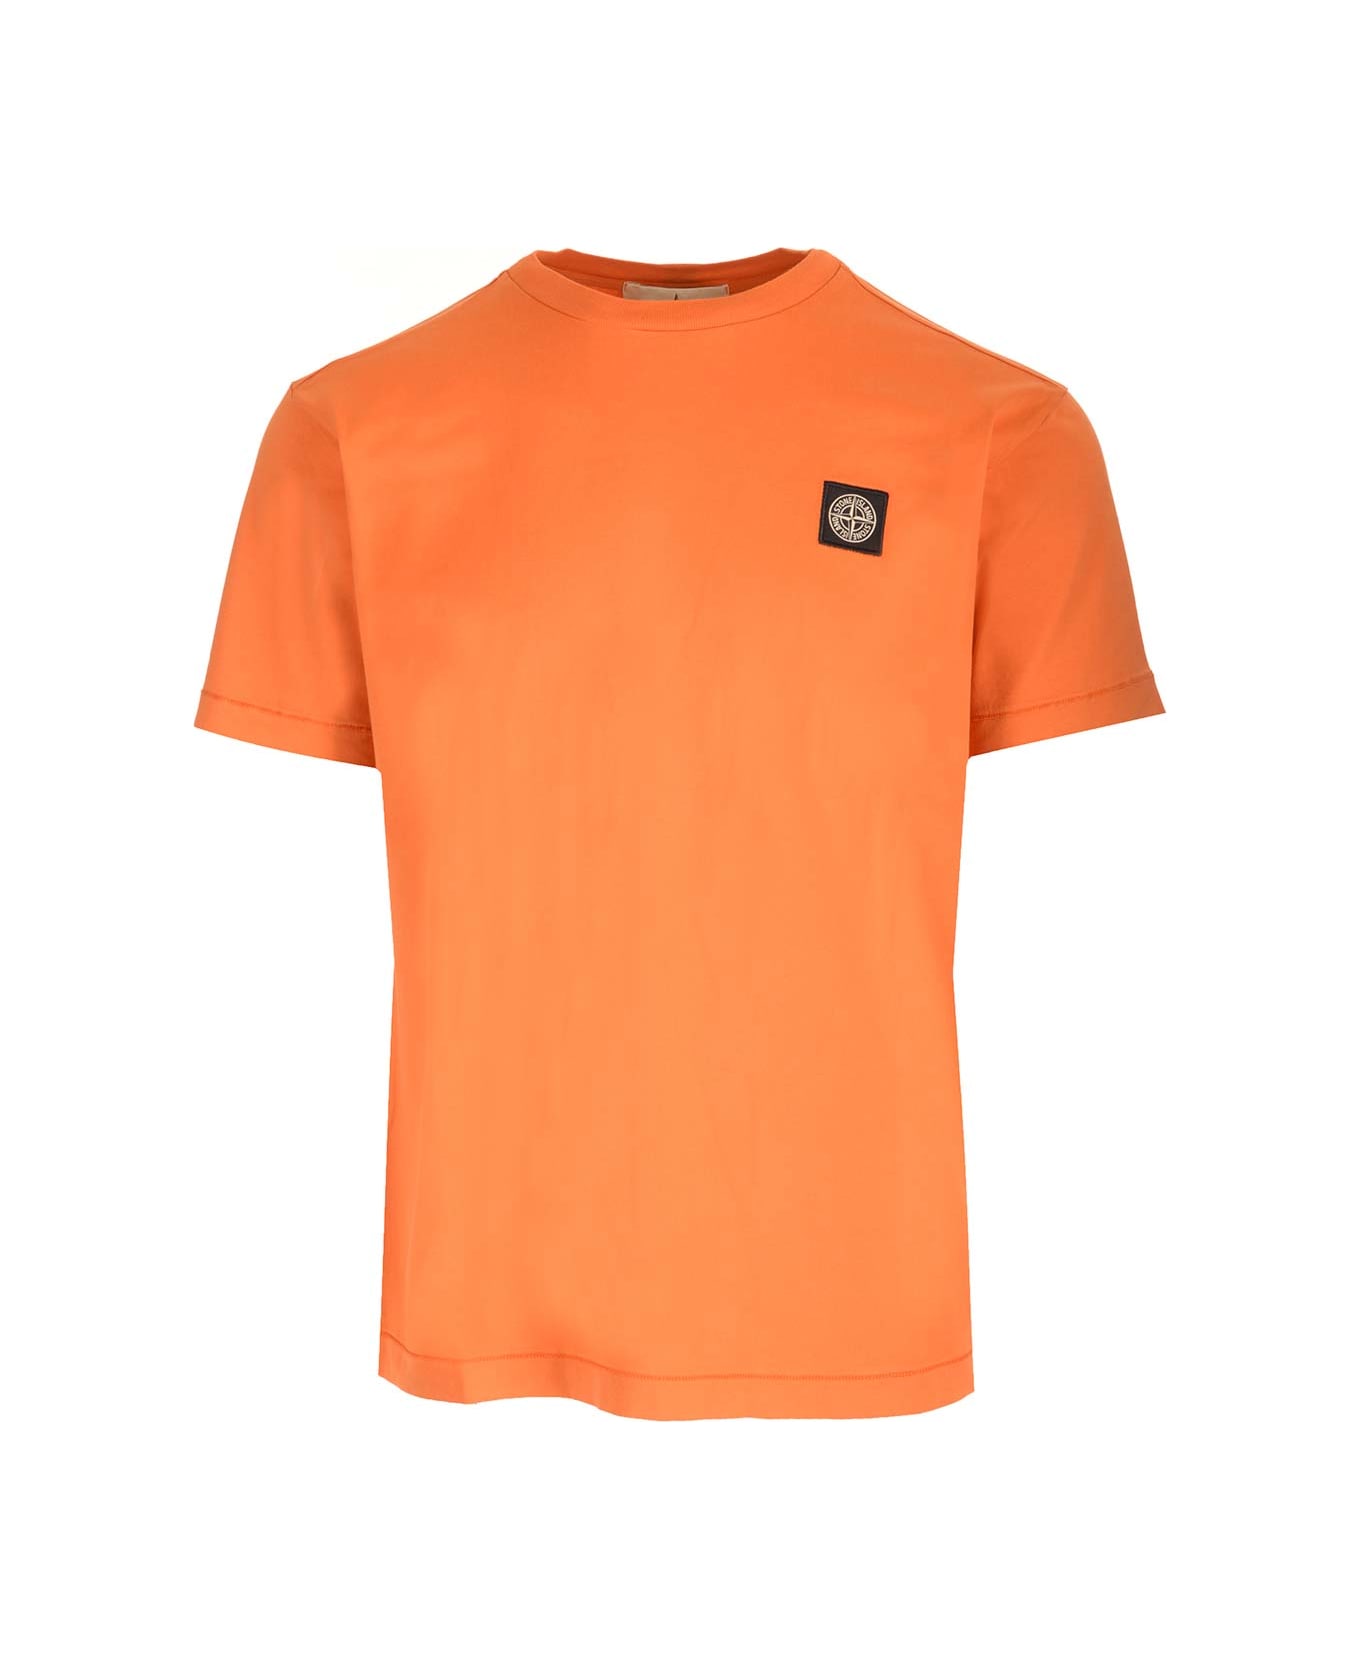 Stone Island Classic Fit T-shirt - Orange